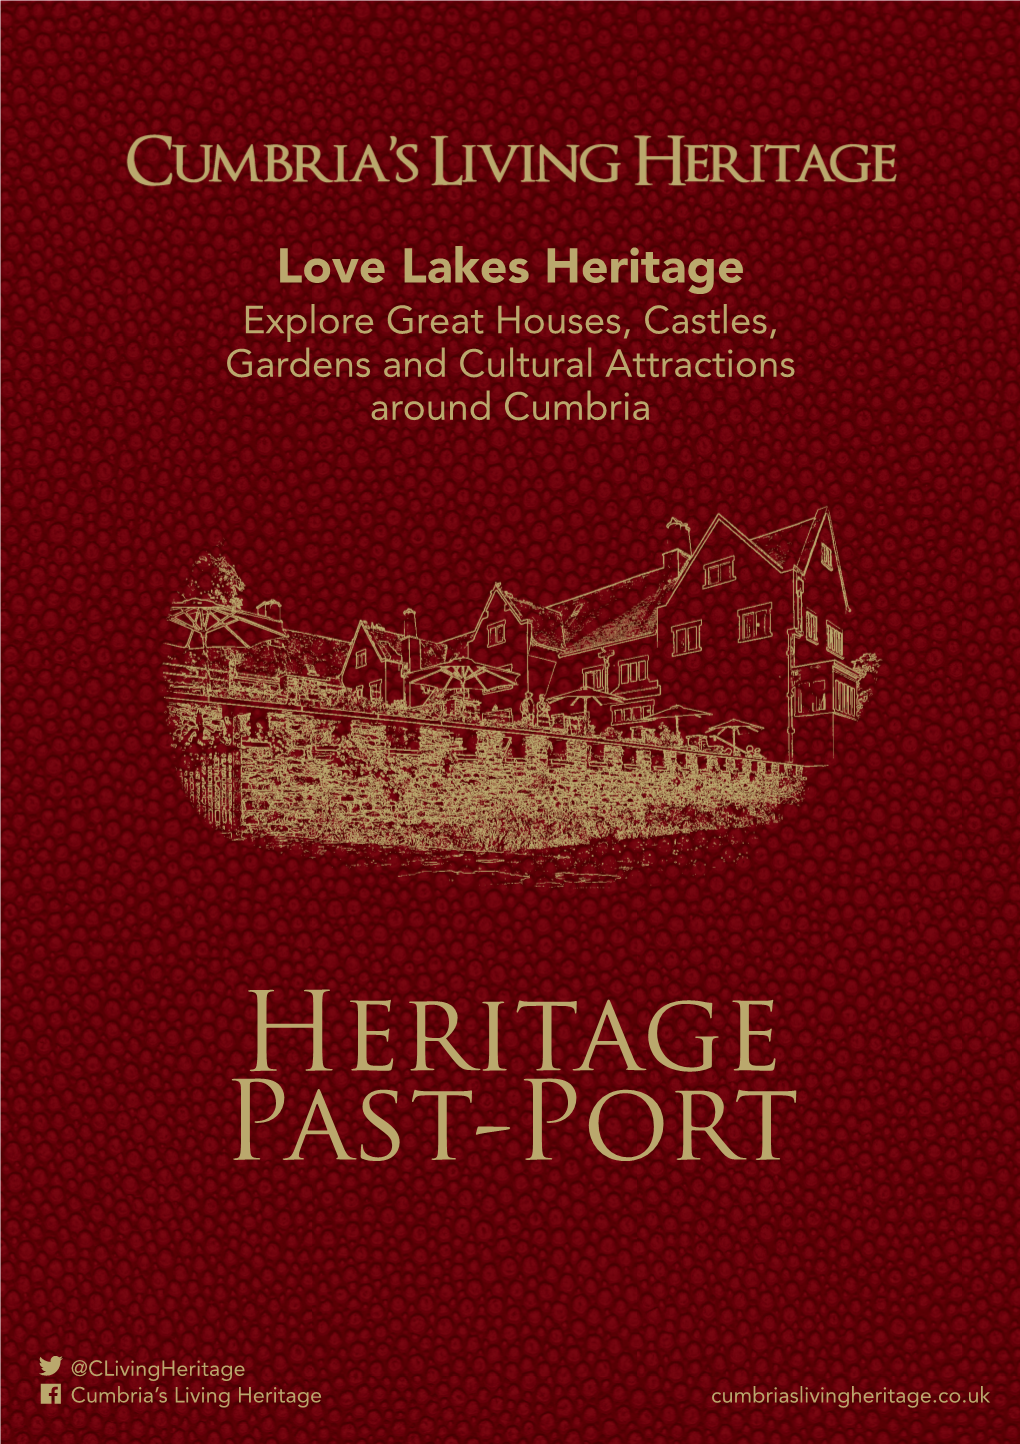 Heritage Past-Port